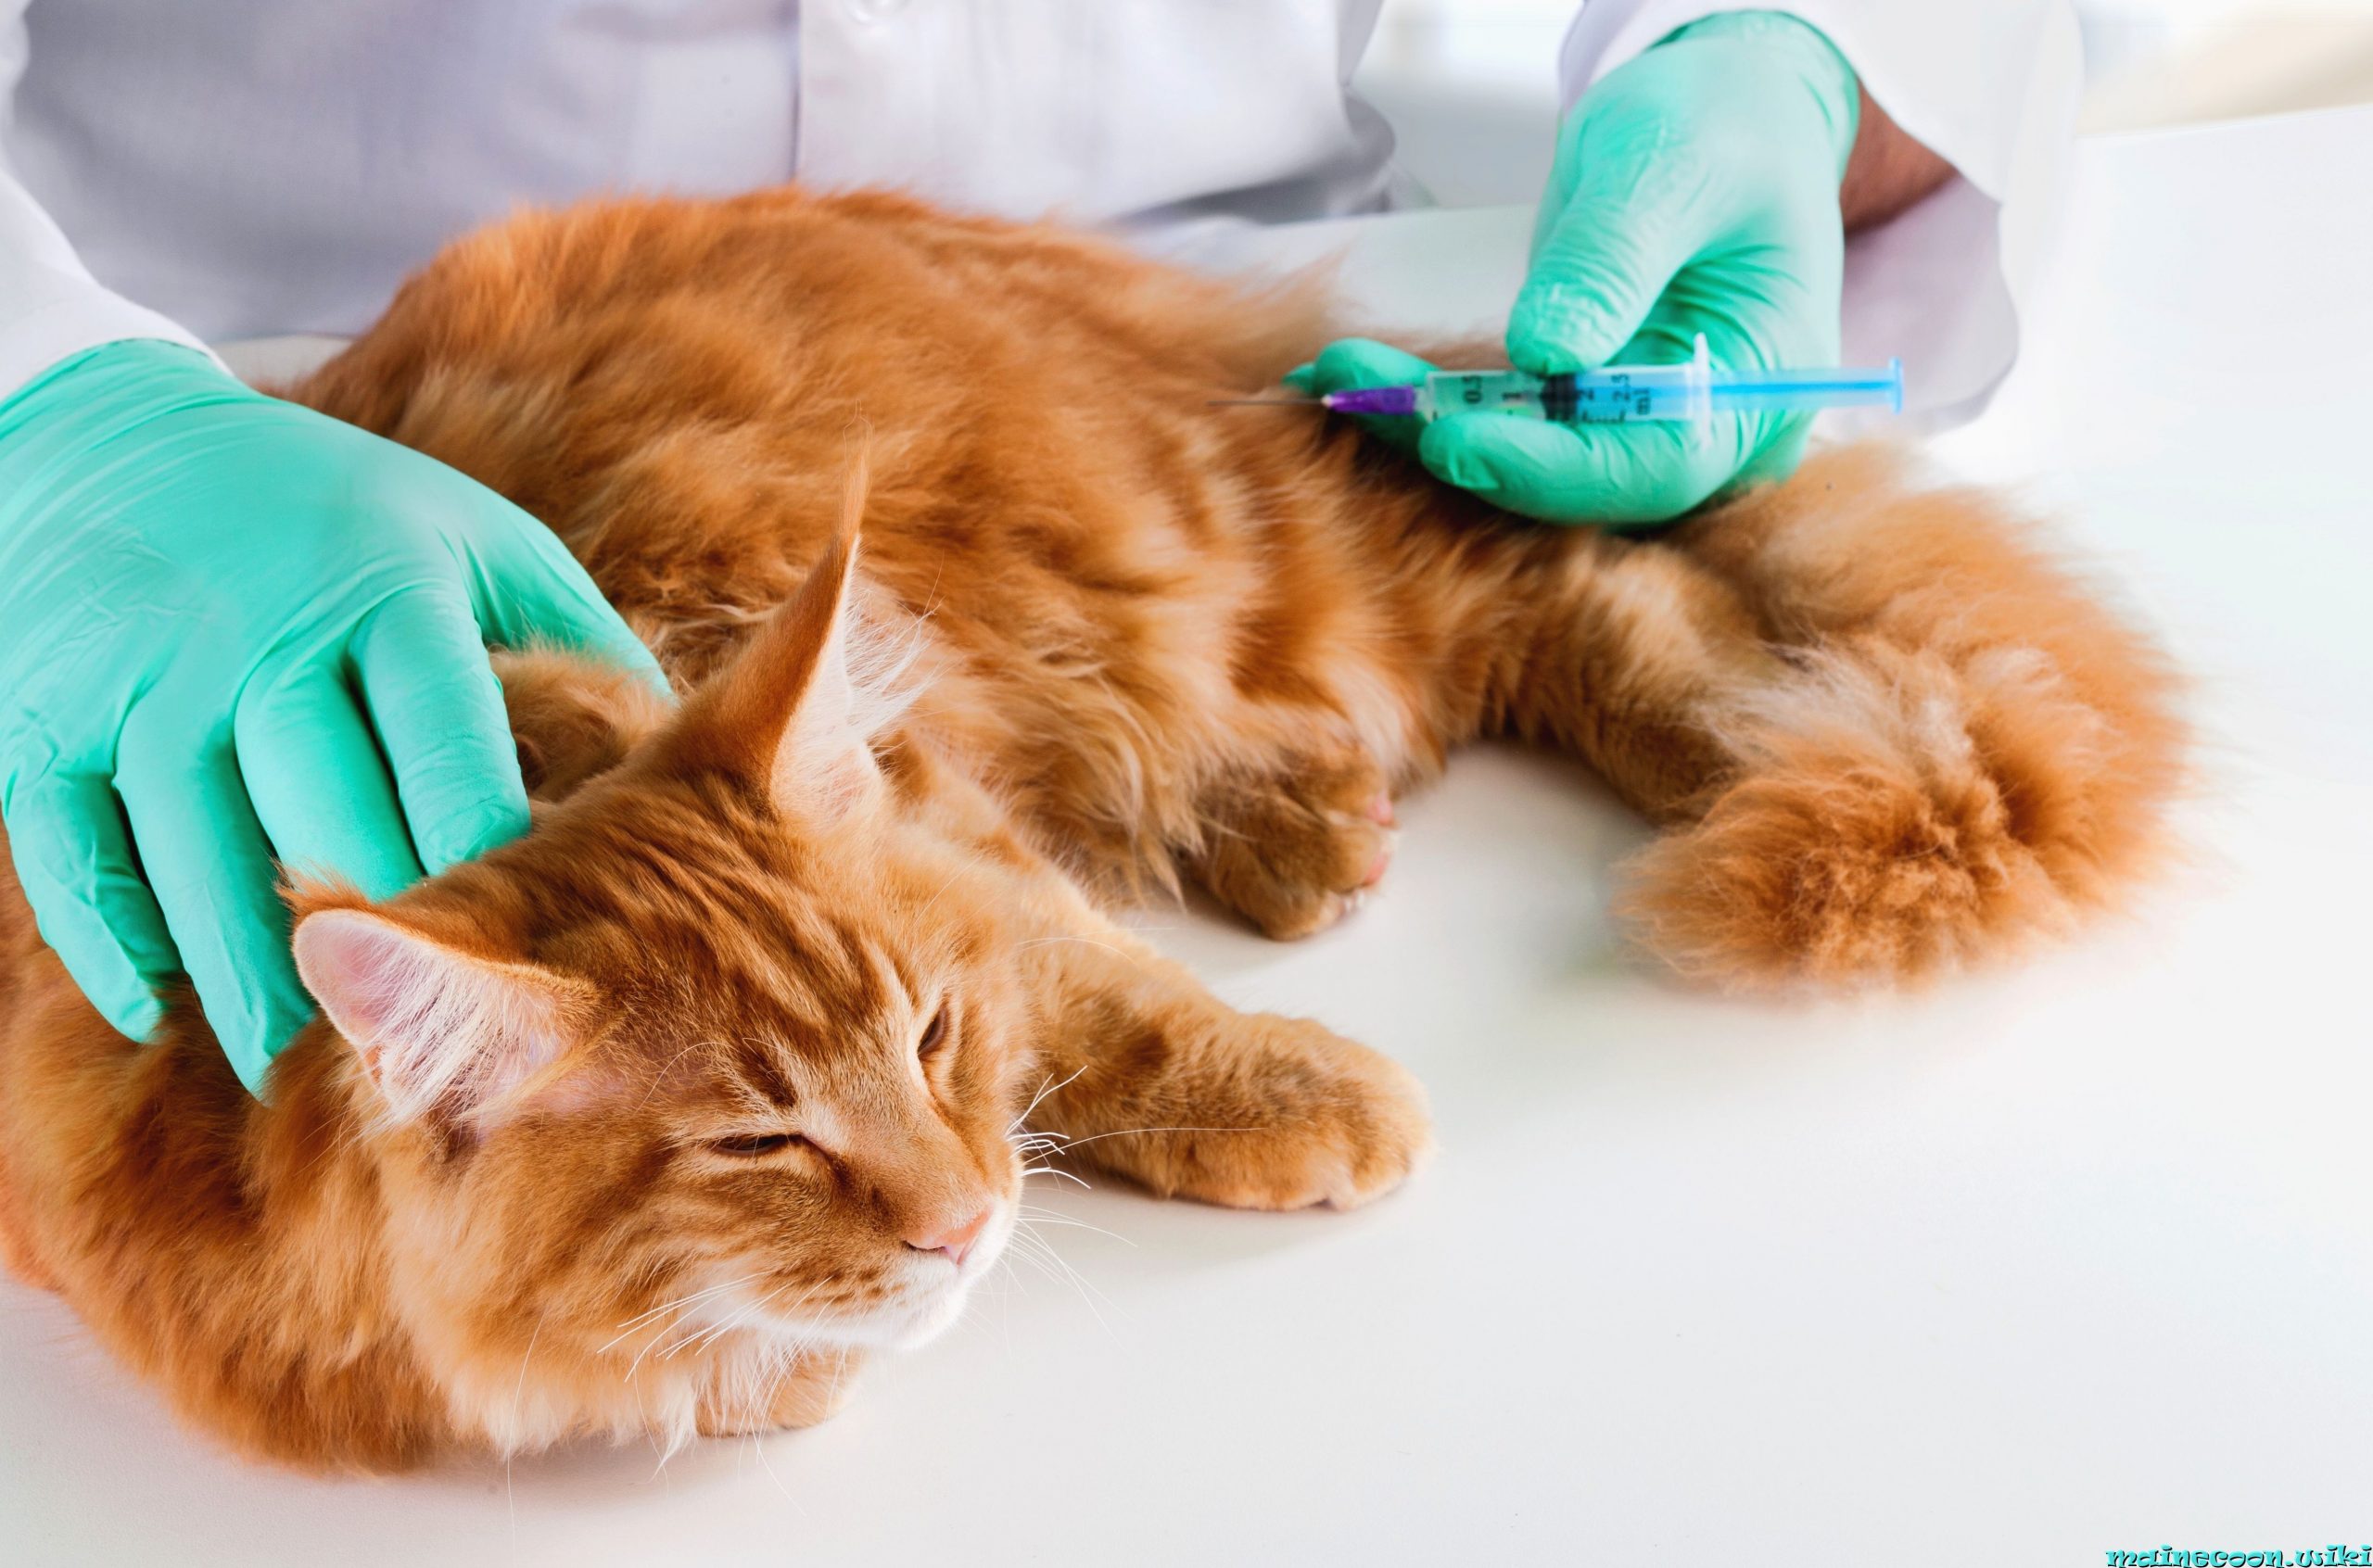  делают прививки рыжему коту Мейн-куна